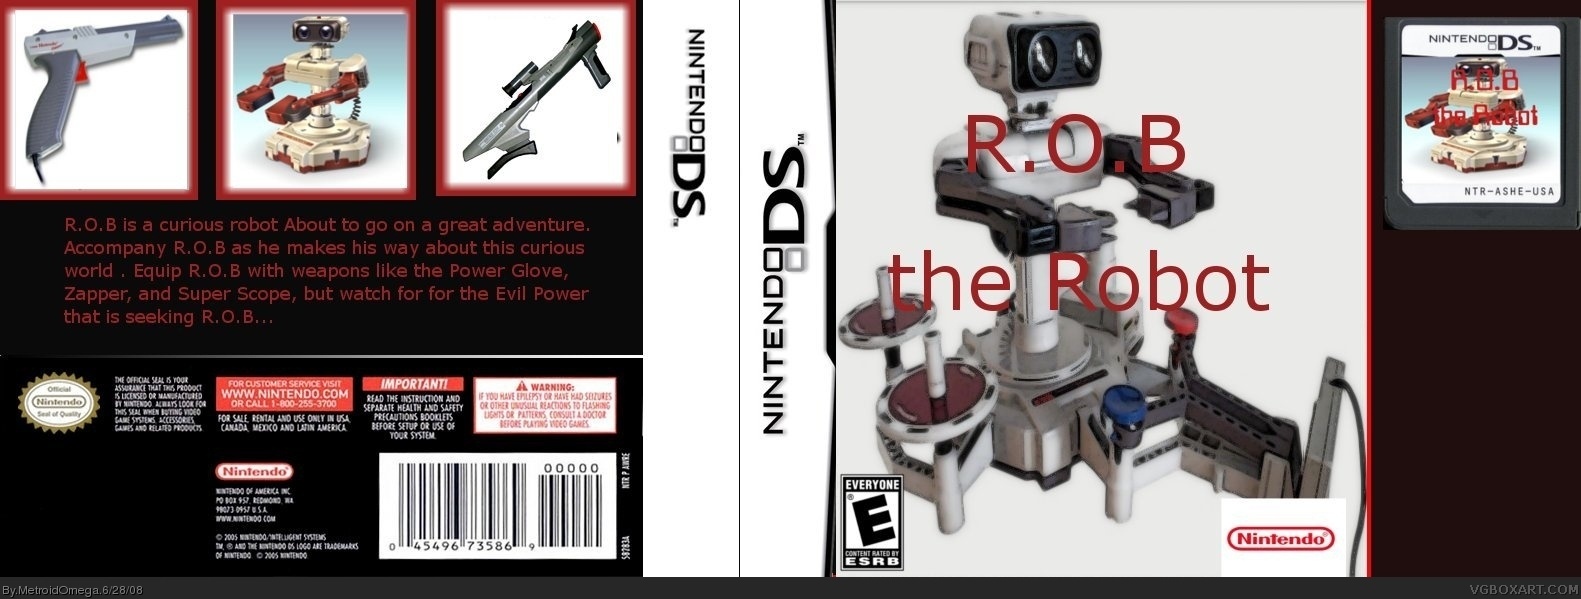 R.O.B the Robot box cover